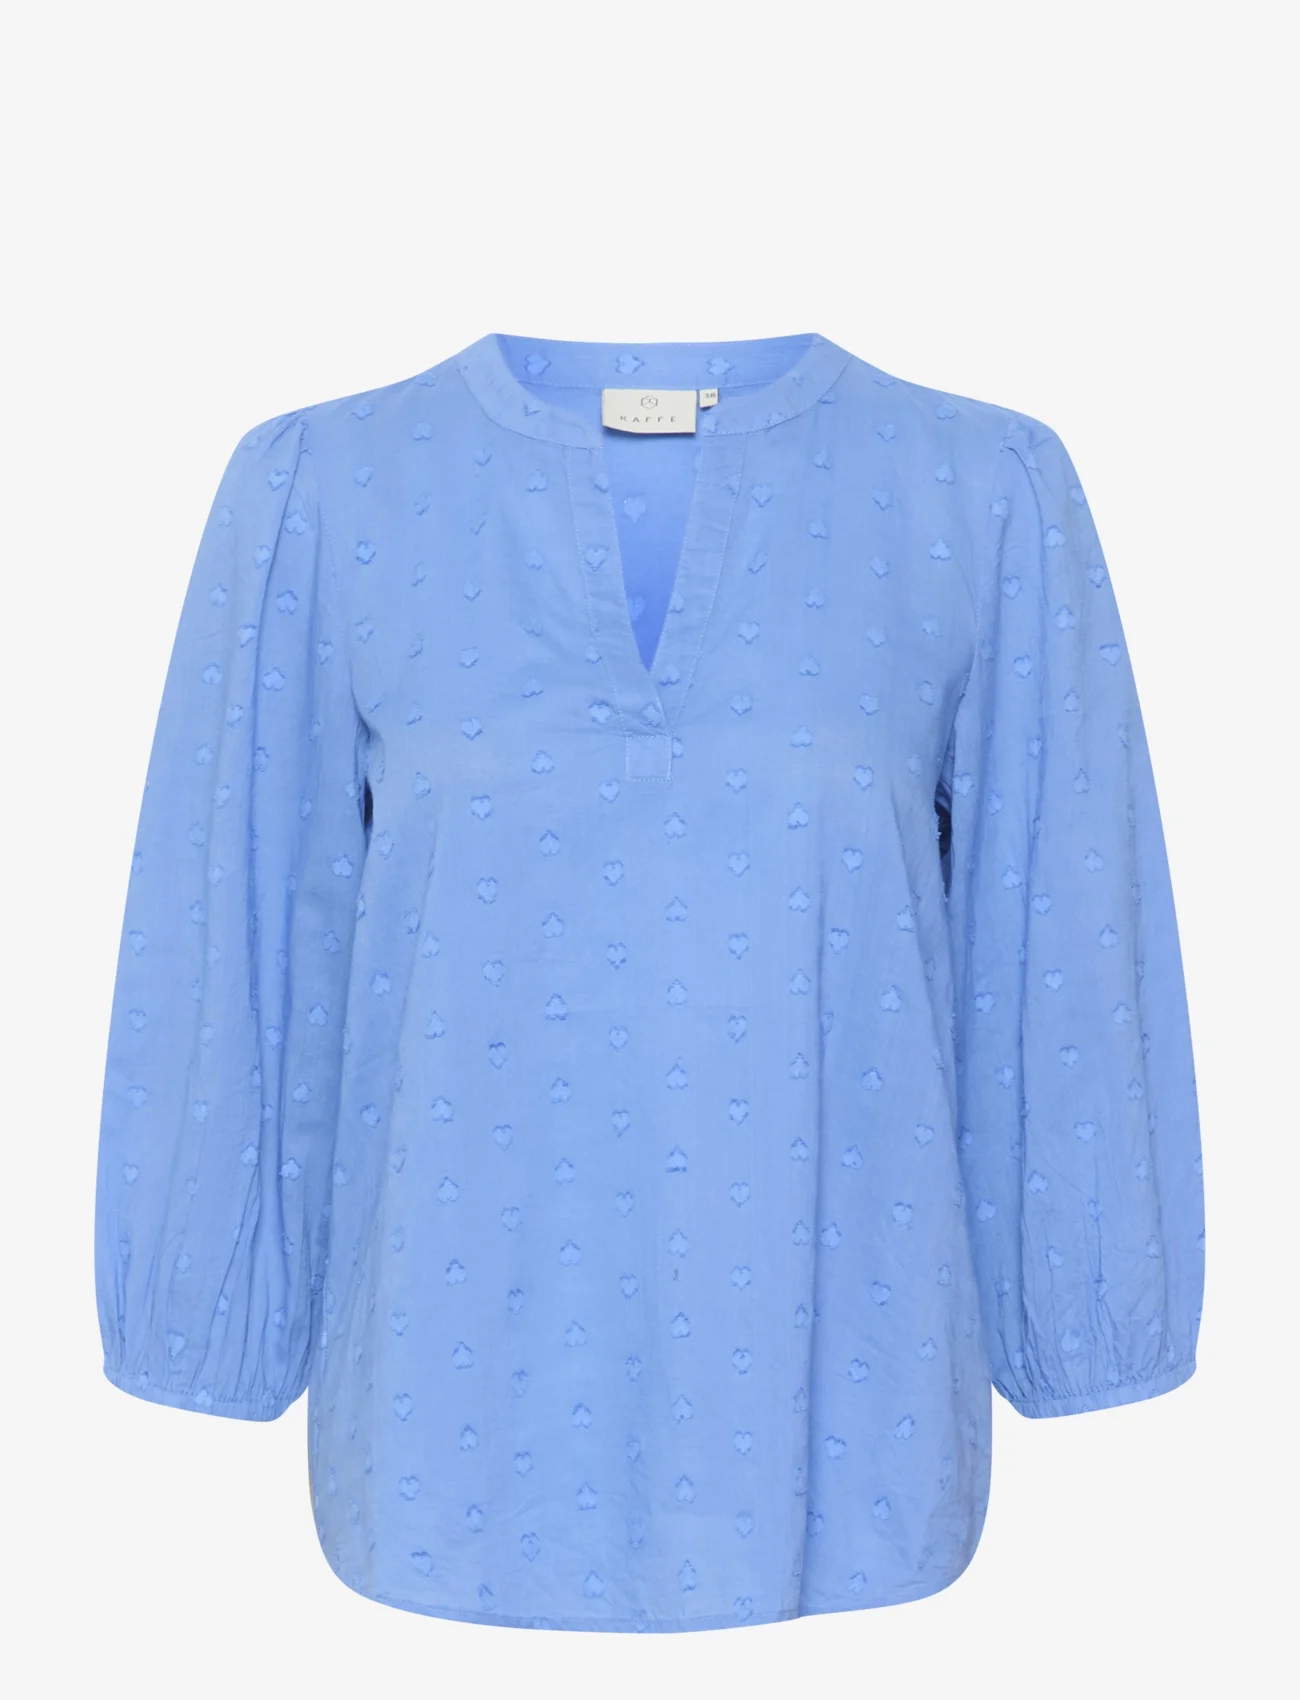 Kaffe - KAjollia Blouse - long-sleeved blouses - ultramarine - 0